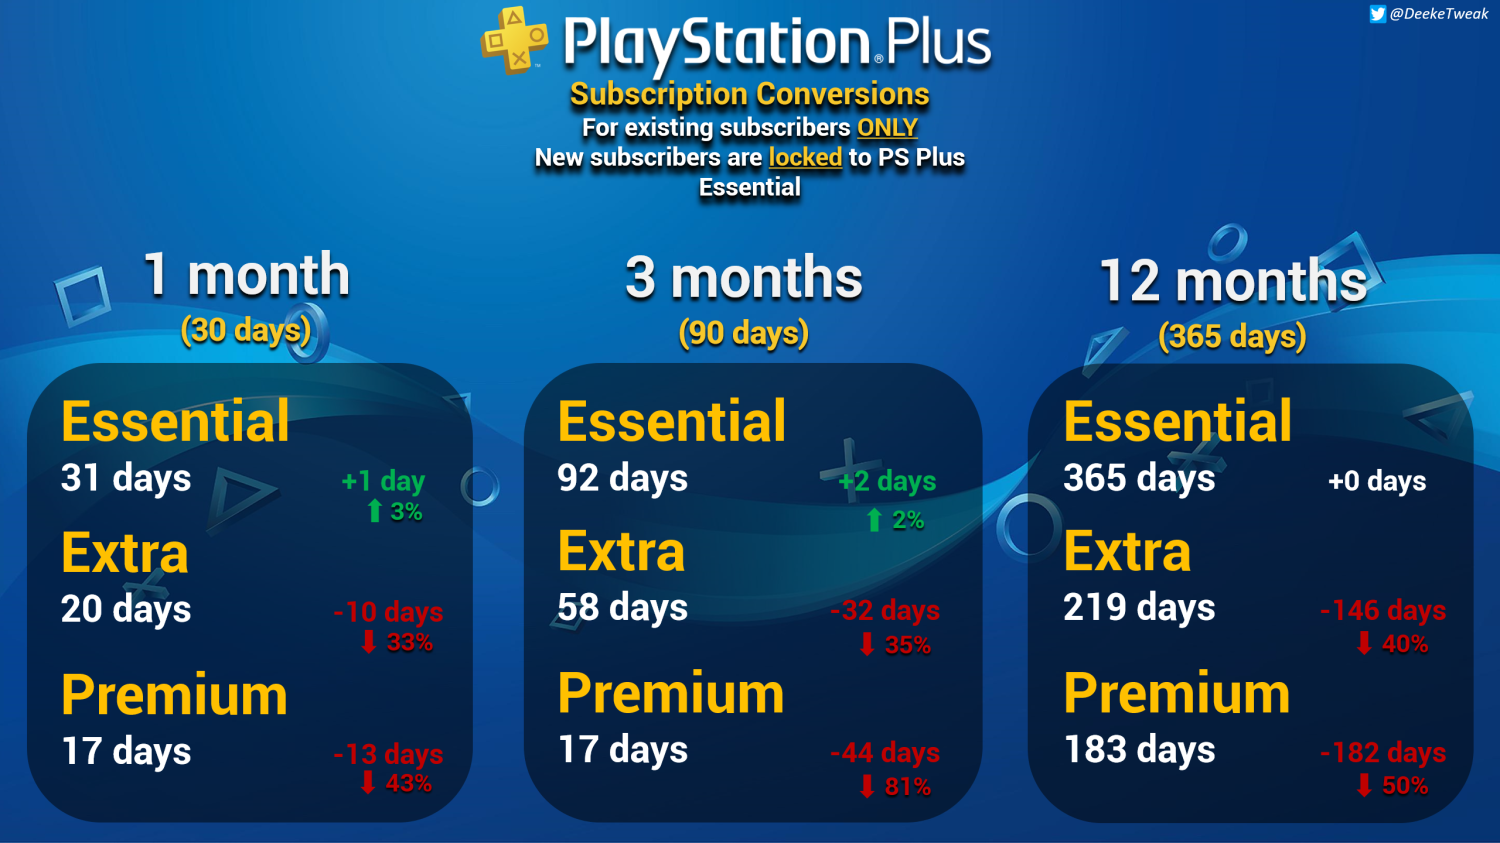 Analysis: Making sense of new PlayStation Plus conversion